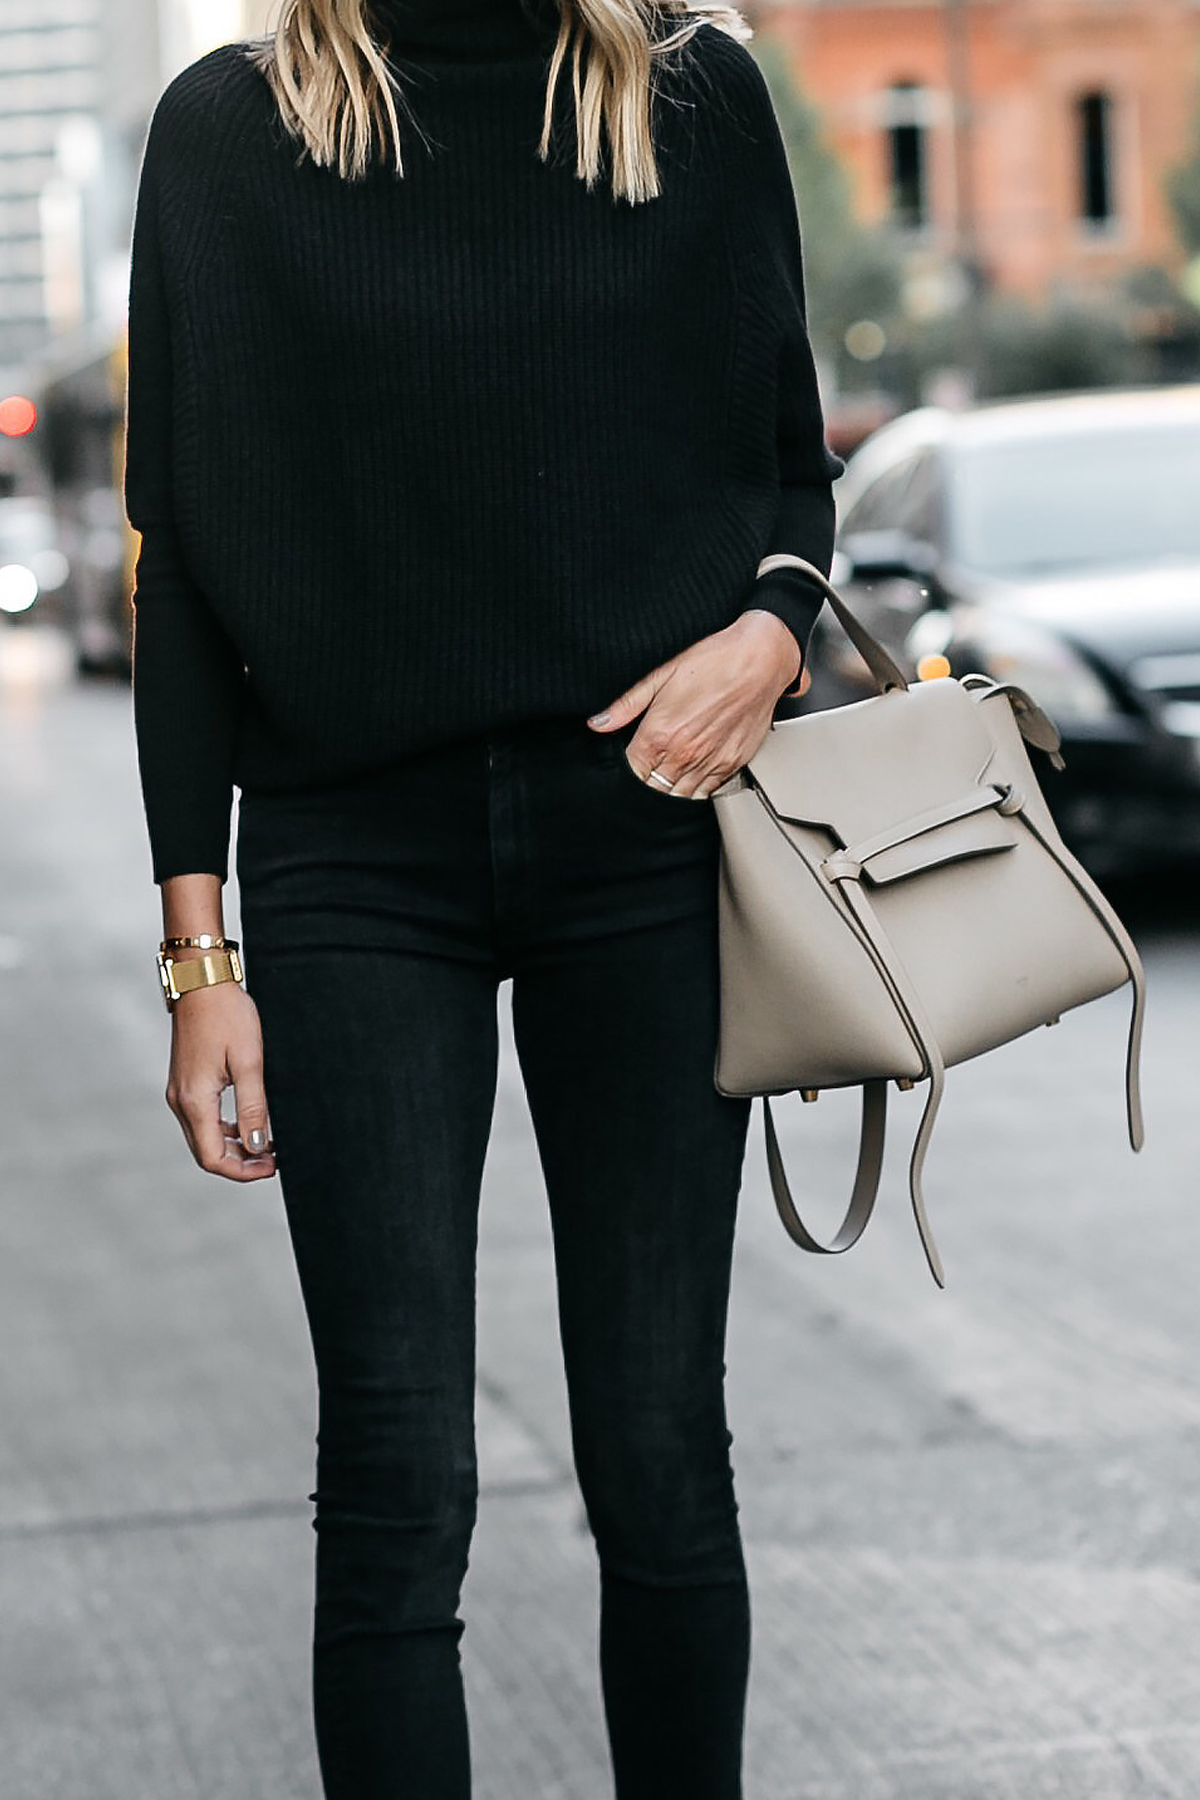 Club Monaco Black Cashmere Sweater Black Jeans Celine Mini Belt Bag Fashion Jackson Dallas Blogger Fashion Blogger Street Style